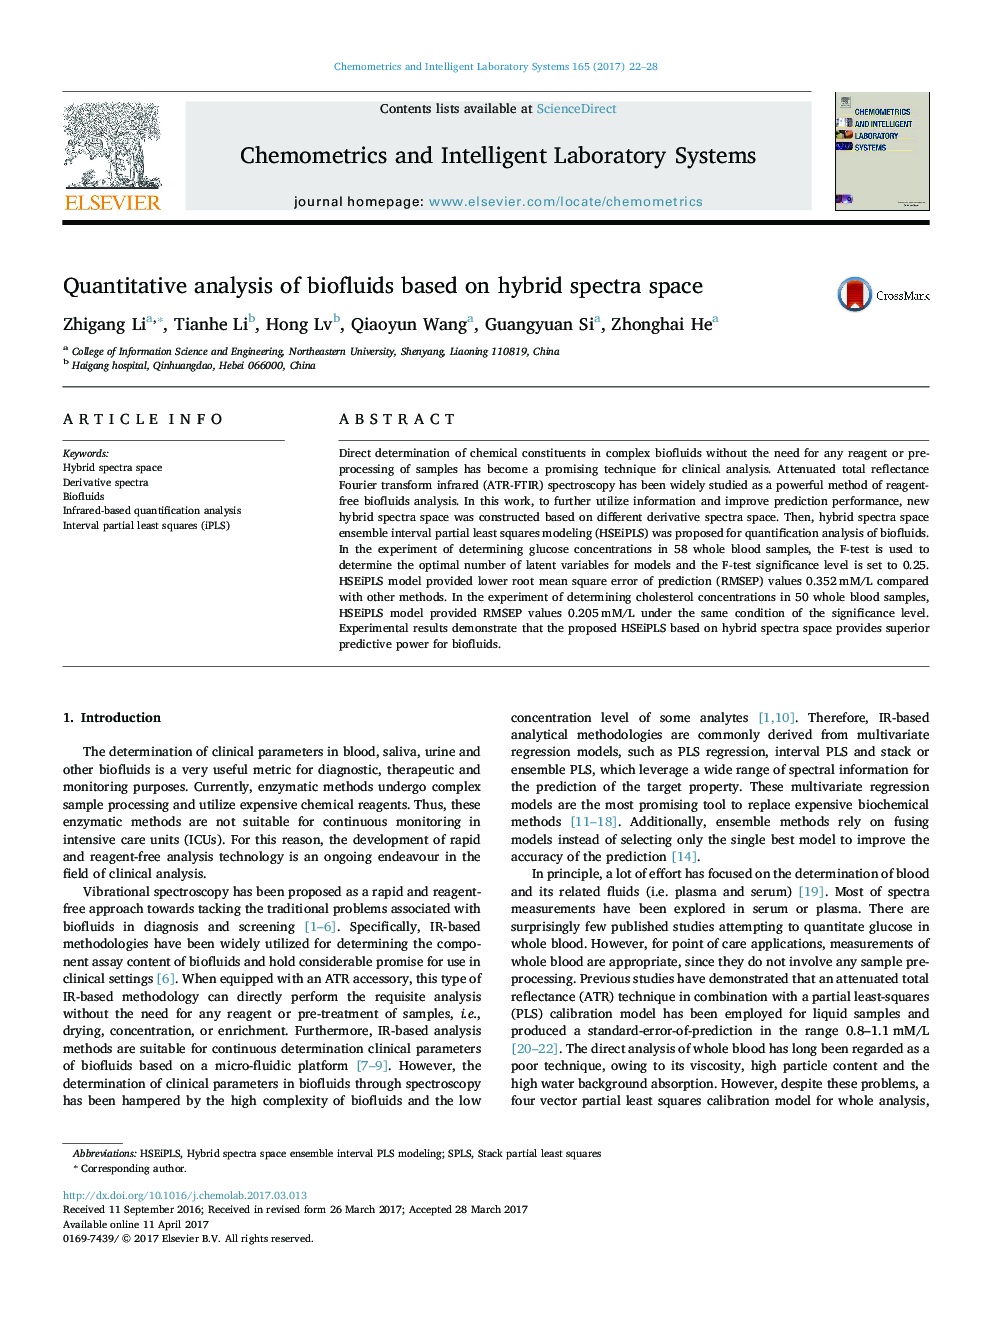 Quantitative analysis of biofluids based on hybrid spectra space